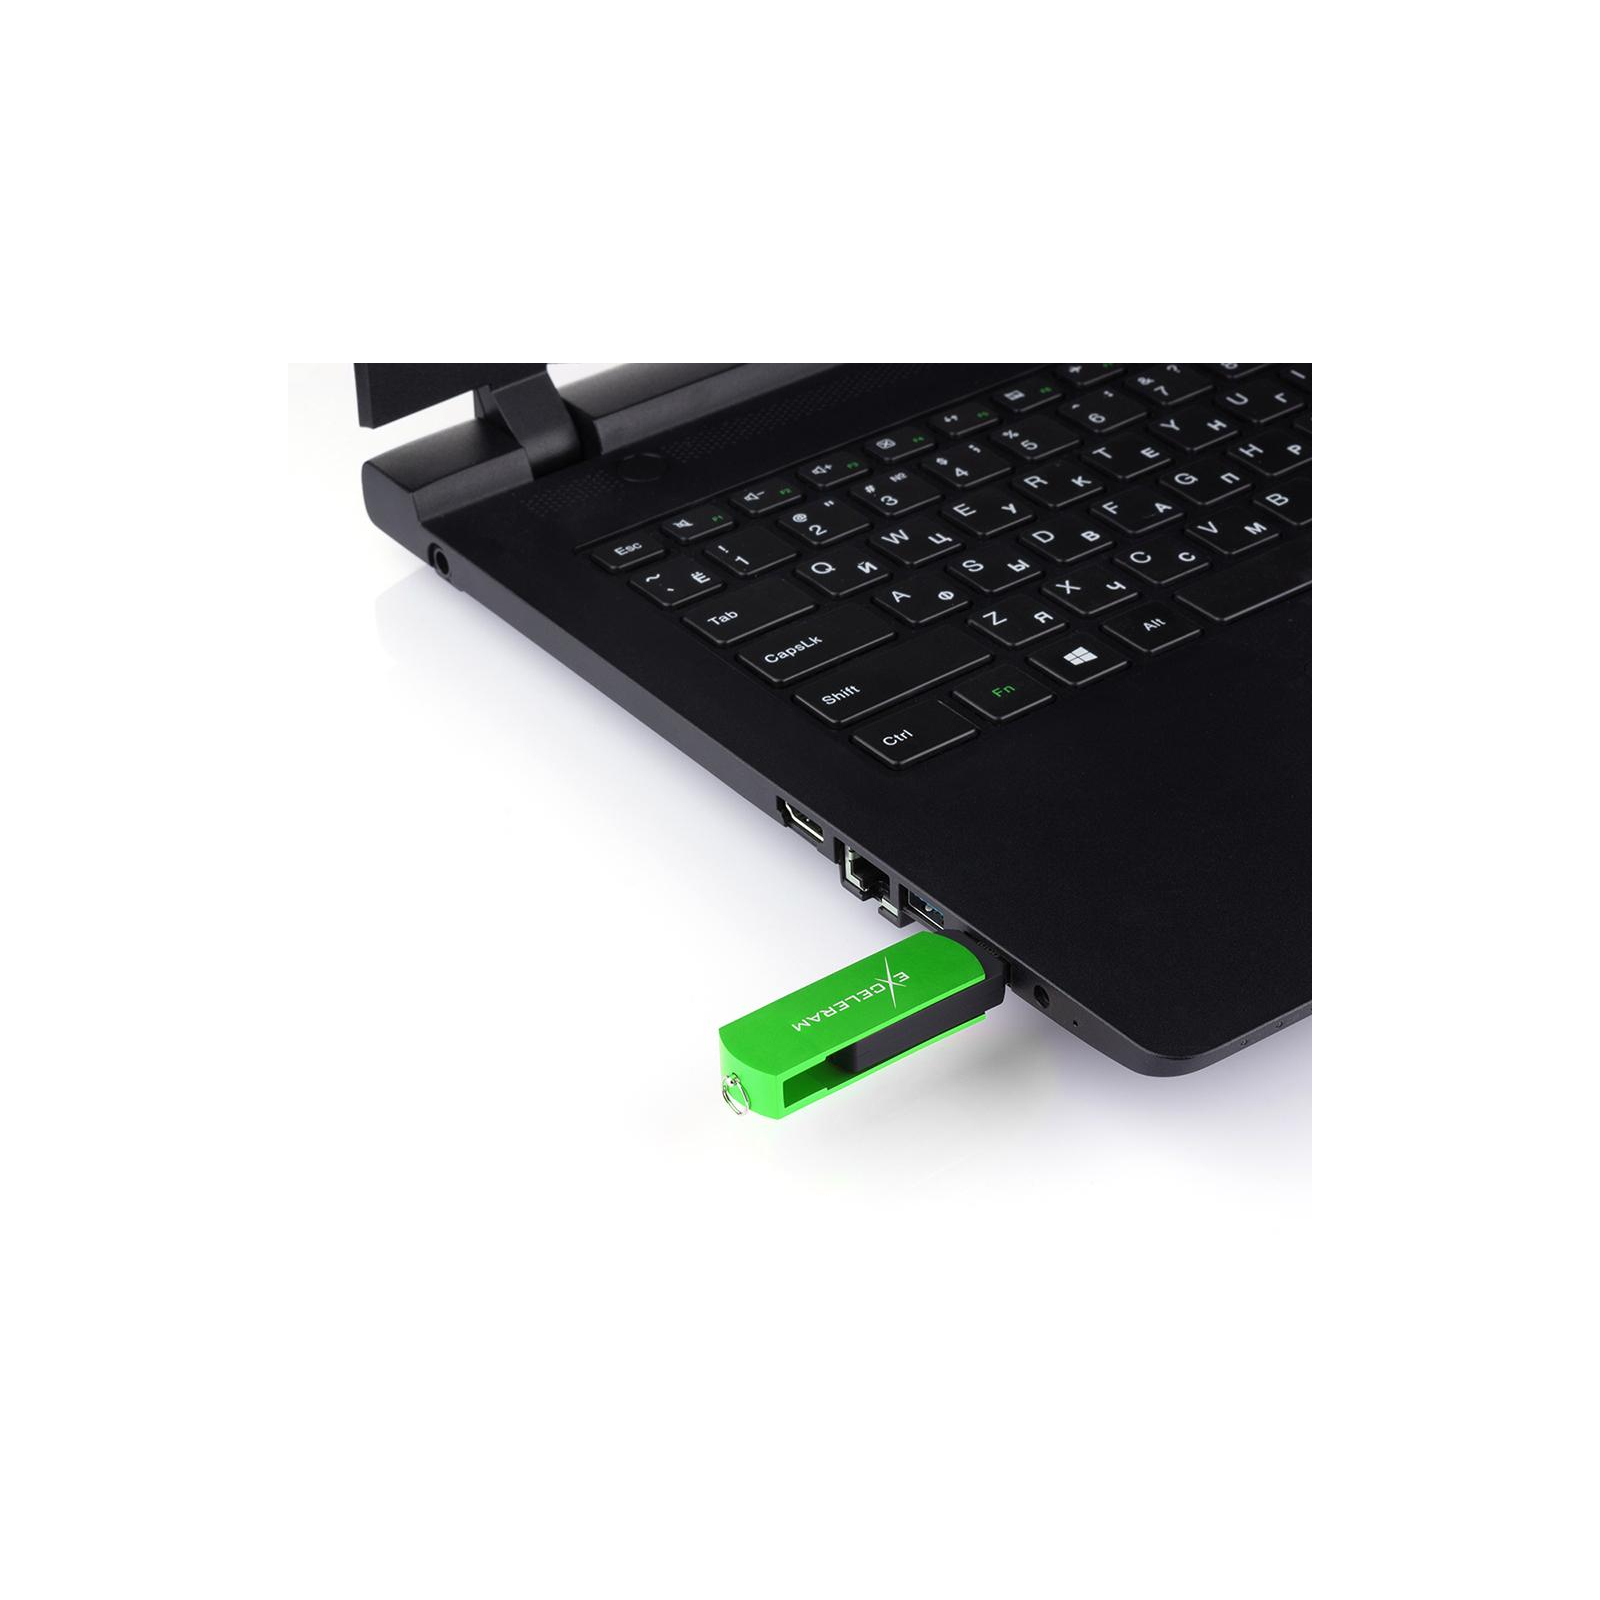 USB флеш накопитель eXceleram 16GB P2 Series Green/Black USB 3.1 Gen 1 (EXP2U3GRB16) изображение 7